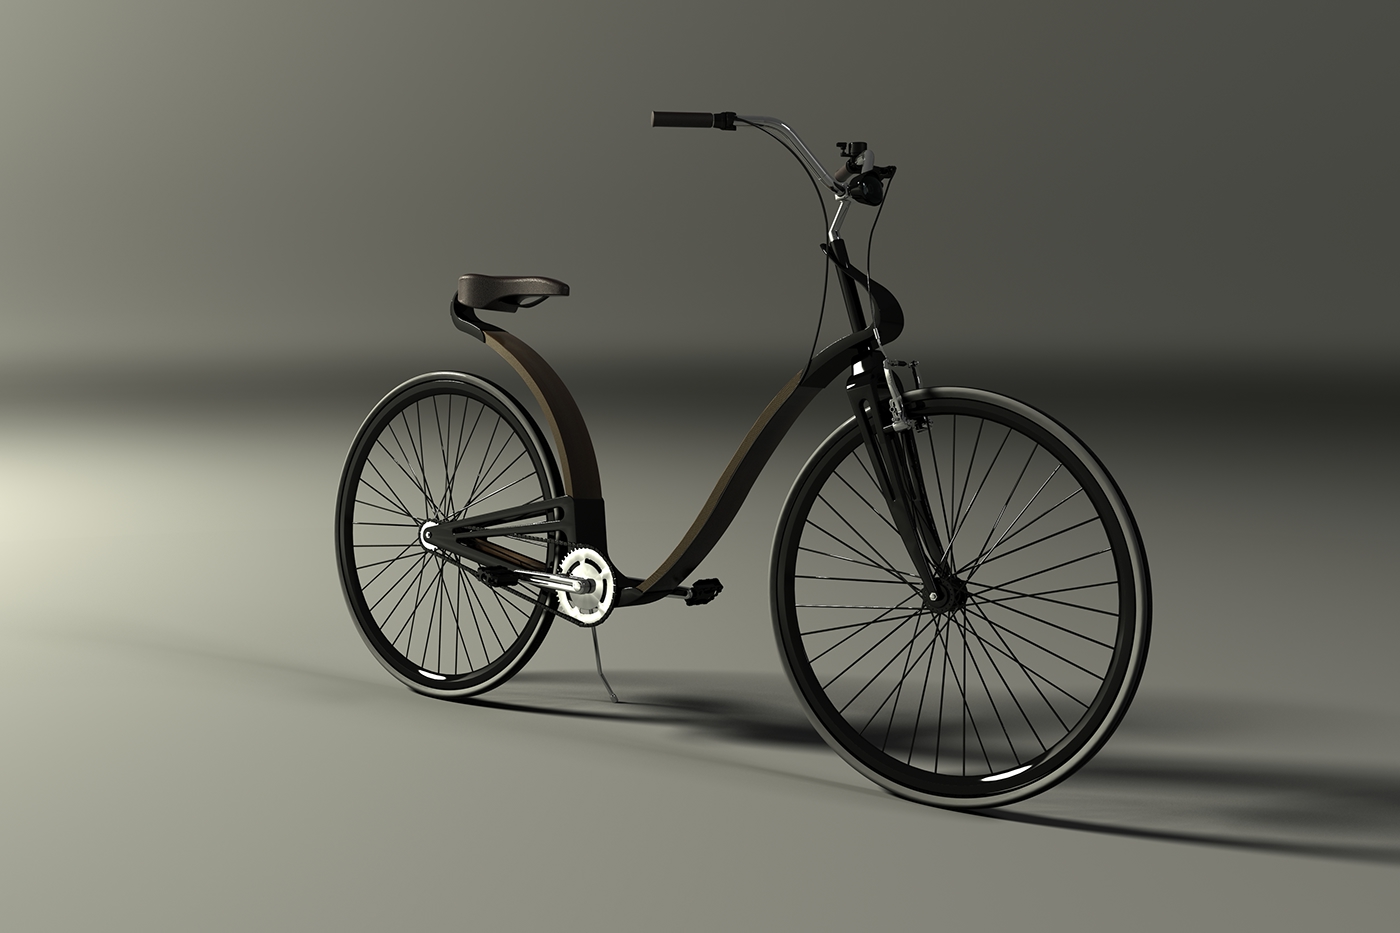 Bicycle Bike wood wood bicycle product design Transport Urban wheel innovation